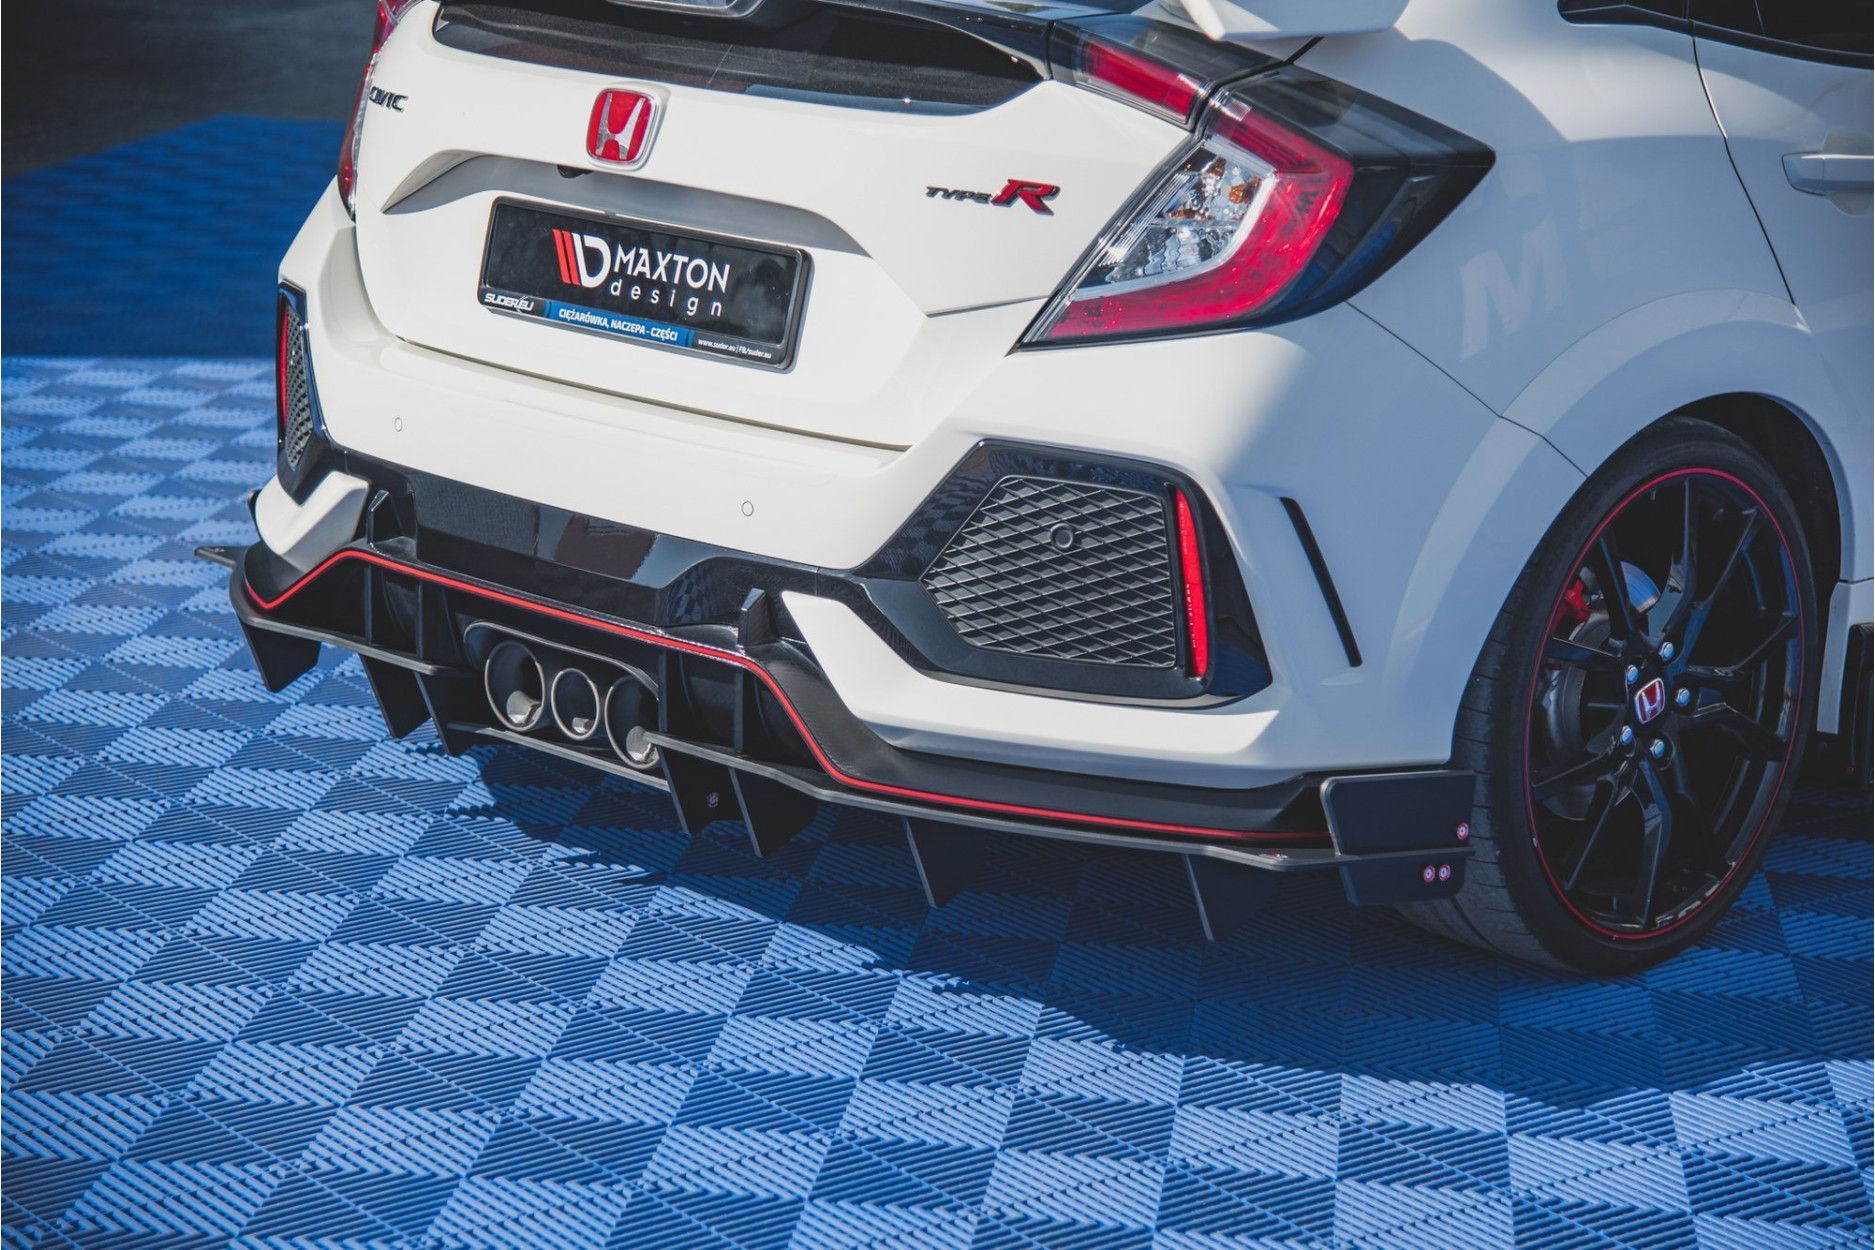 Maxtondesign Diffusor für Honda Civic FK8 Type-R Racing schwarz plastik rau